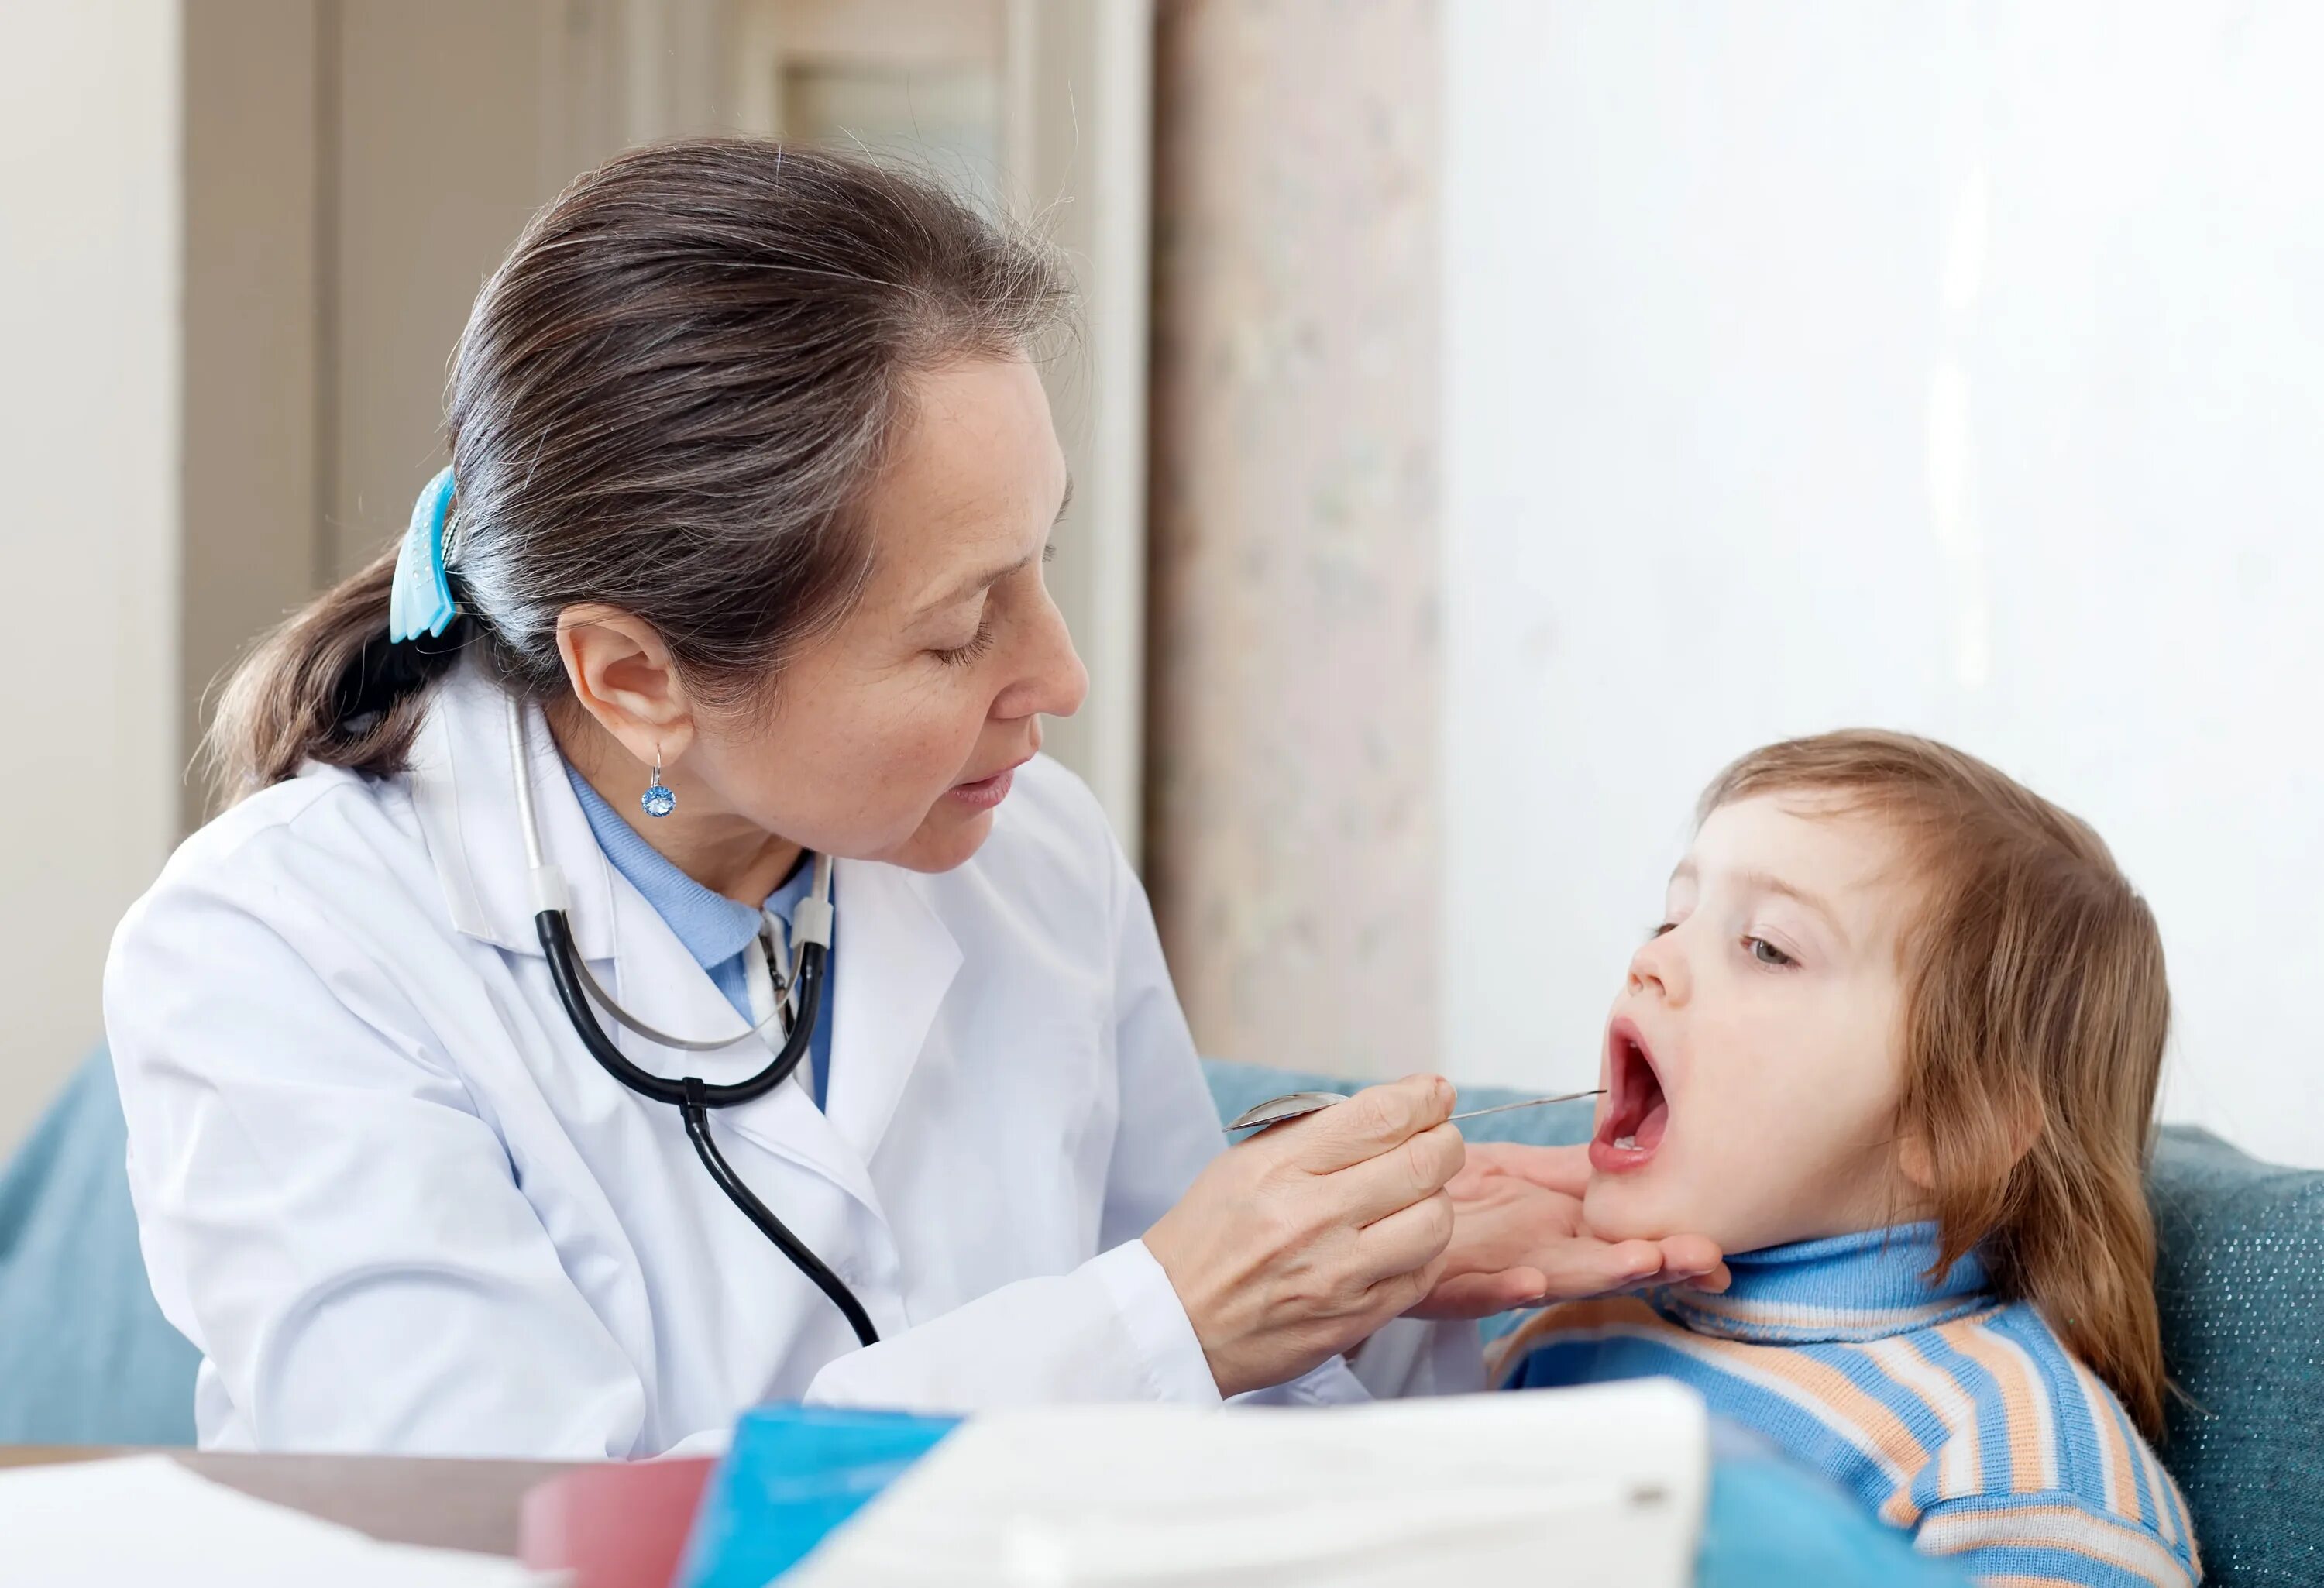 Лечение горла врачи. Врач осматривает ребенка. Педиатр осматривает ребенка. Врач осматривает горло. Педиатр и ребенок.